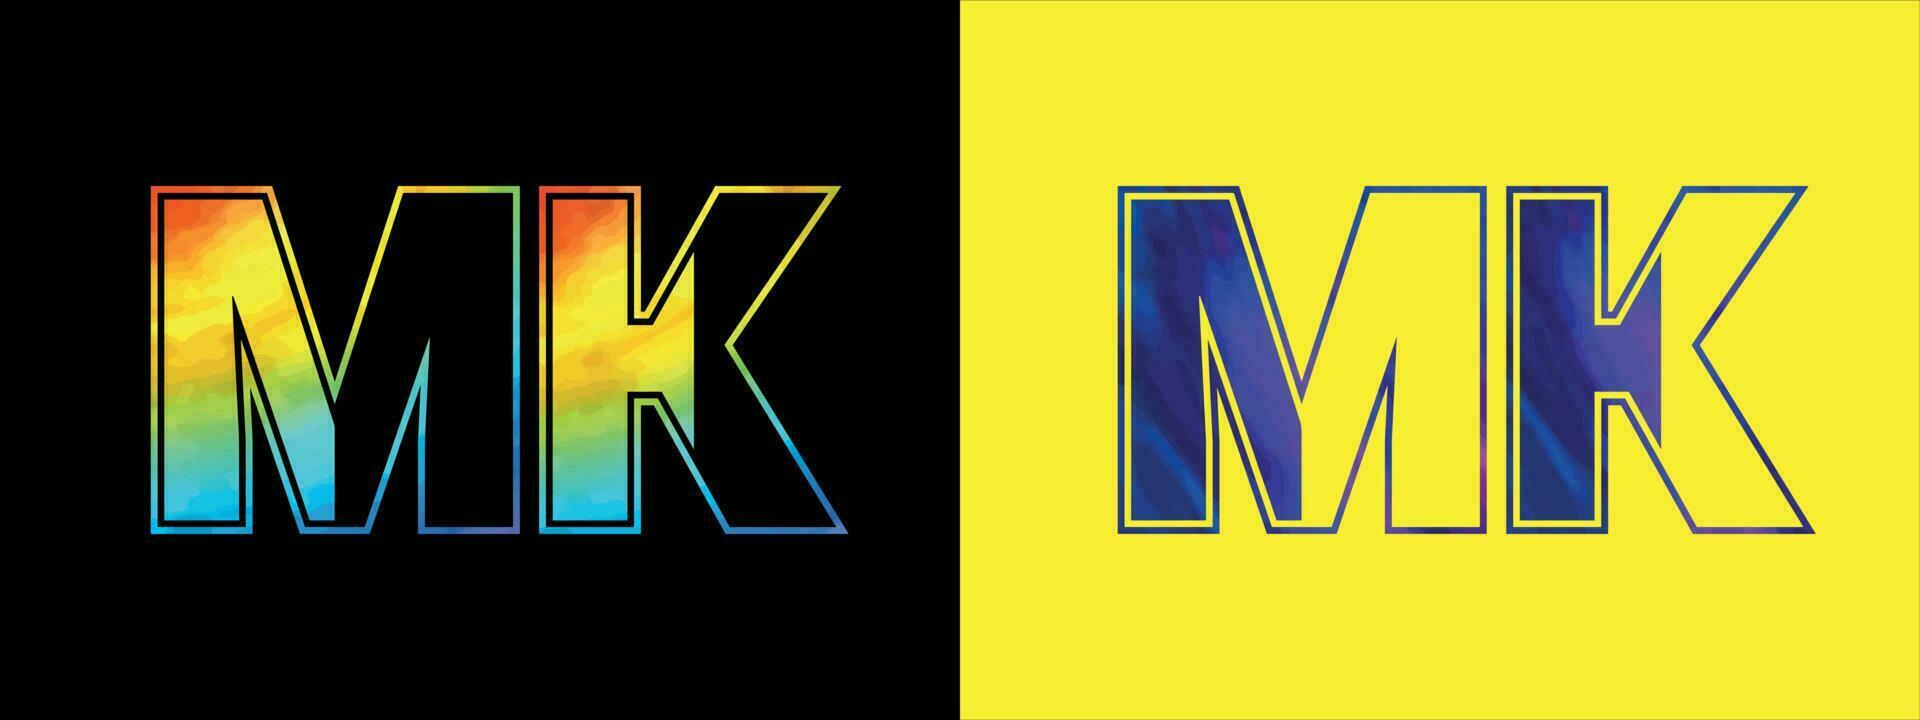 letra mk logo diseño vector modelo. creativo moderno lujoso logotipo para corporativo negocio identidad